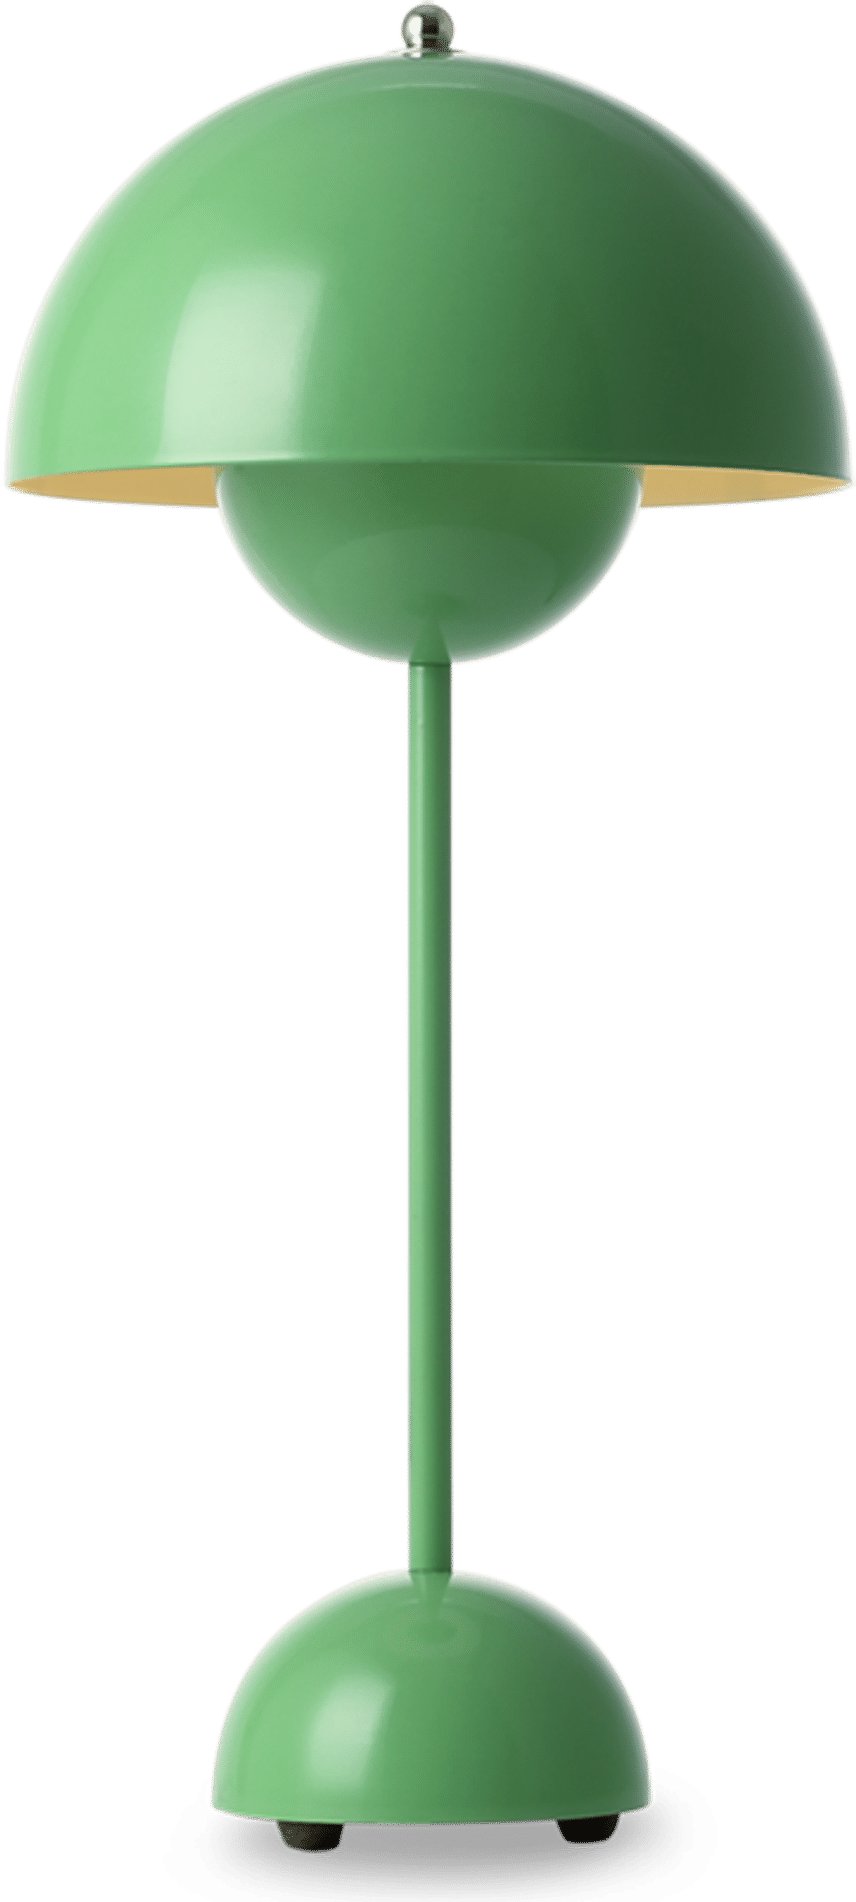 Flowerpot Style Table Lamp Green image.